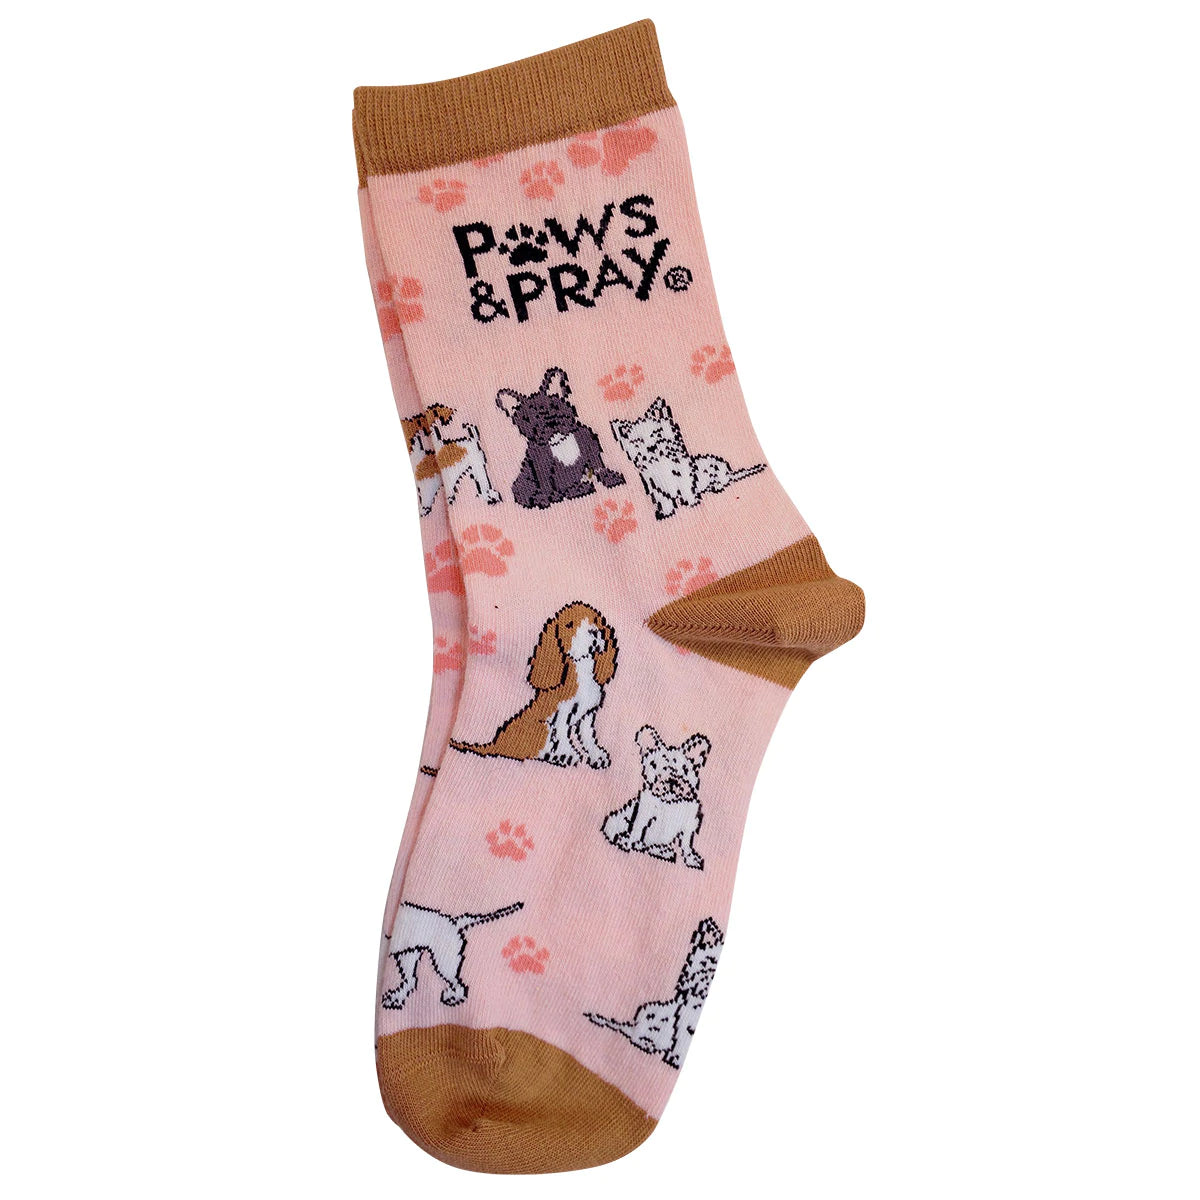 Paws & Pray Socks